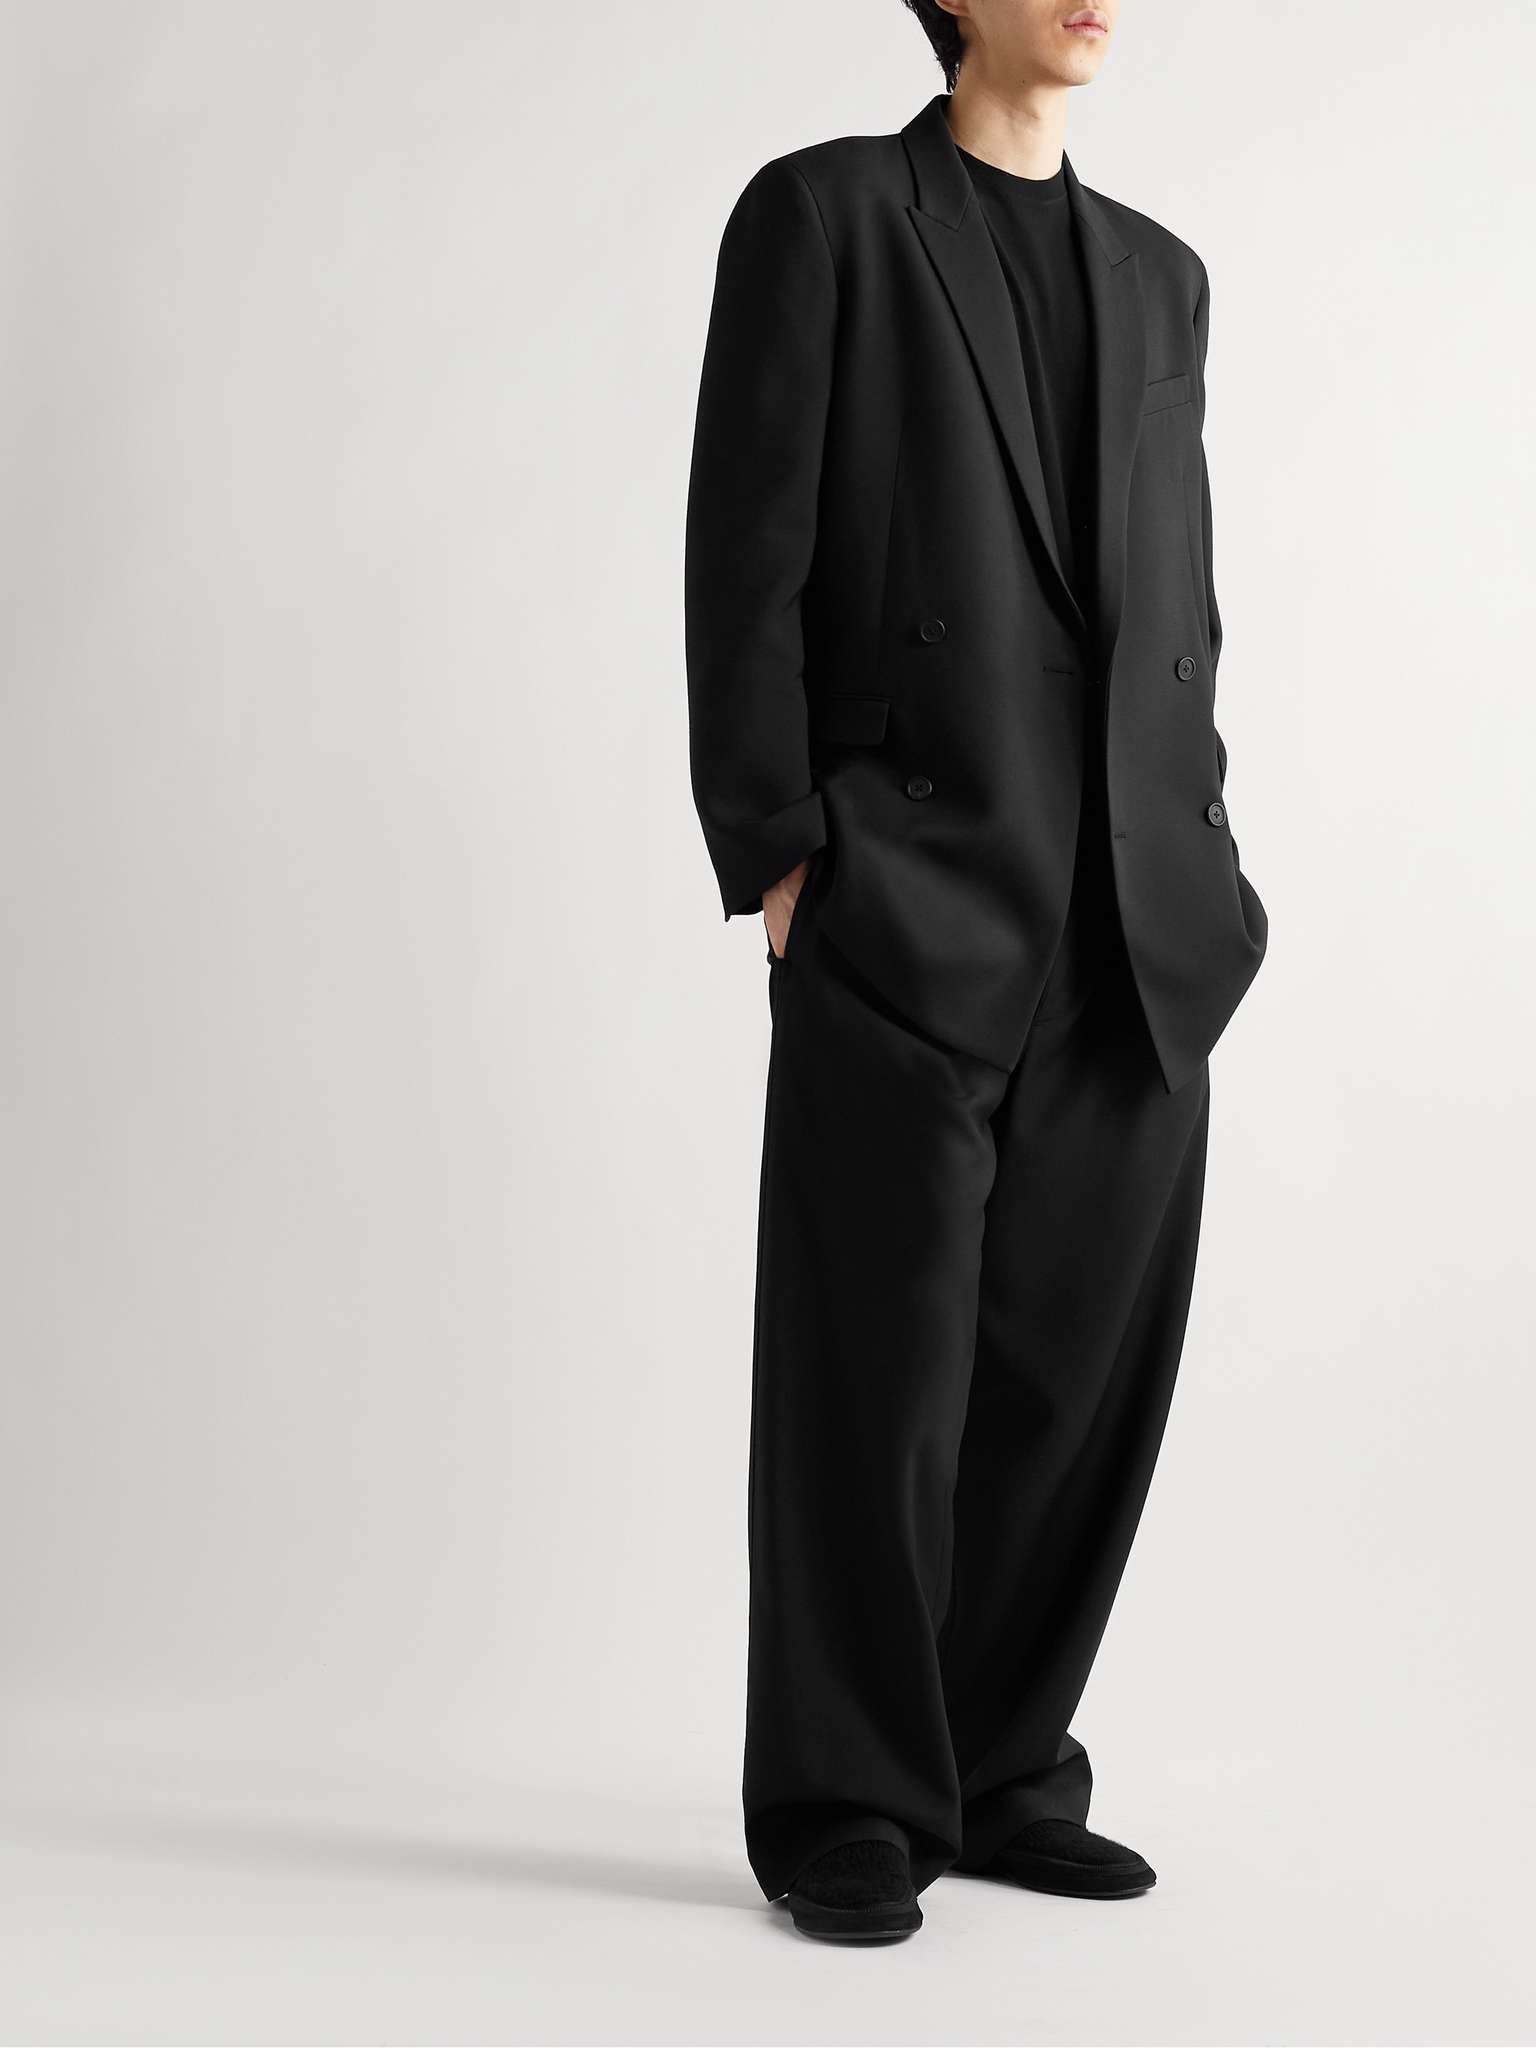 THE ROW Gavin Wool-Blend Suit Jacket for Men | MR PORTER